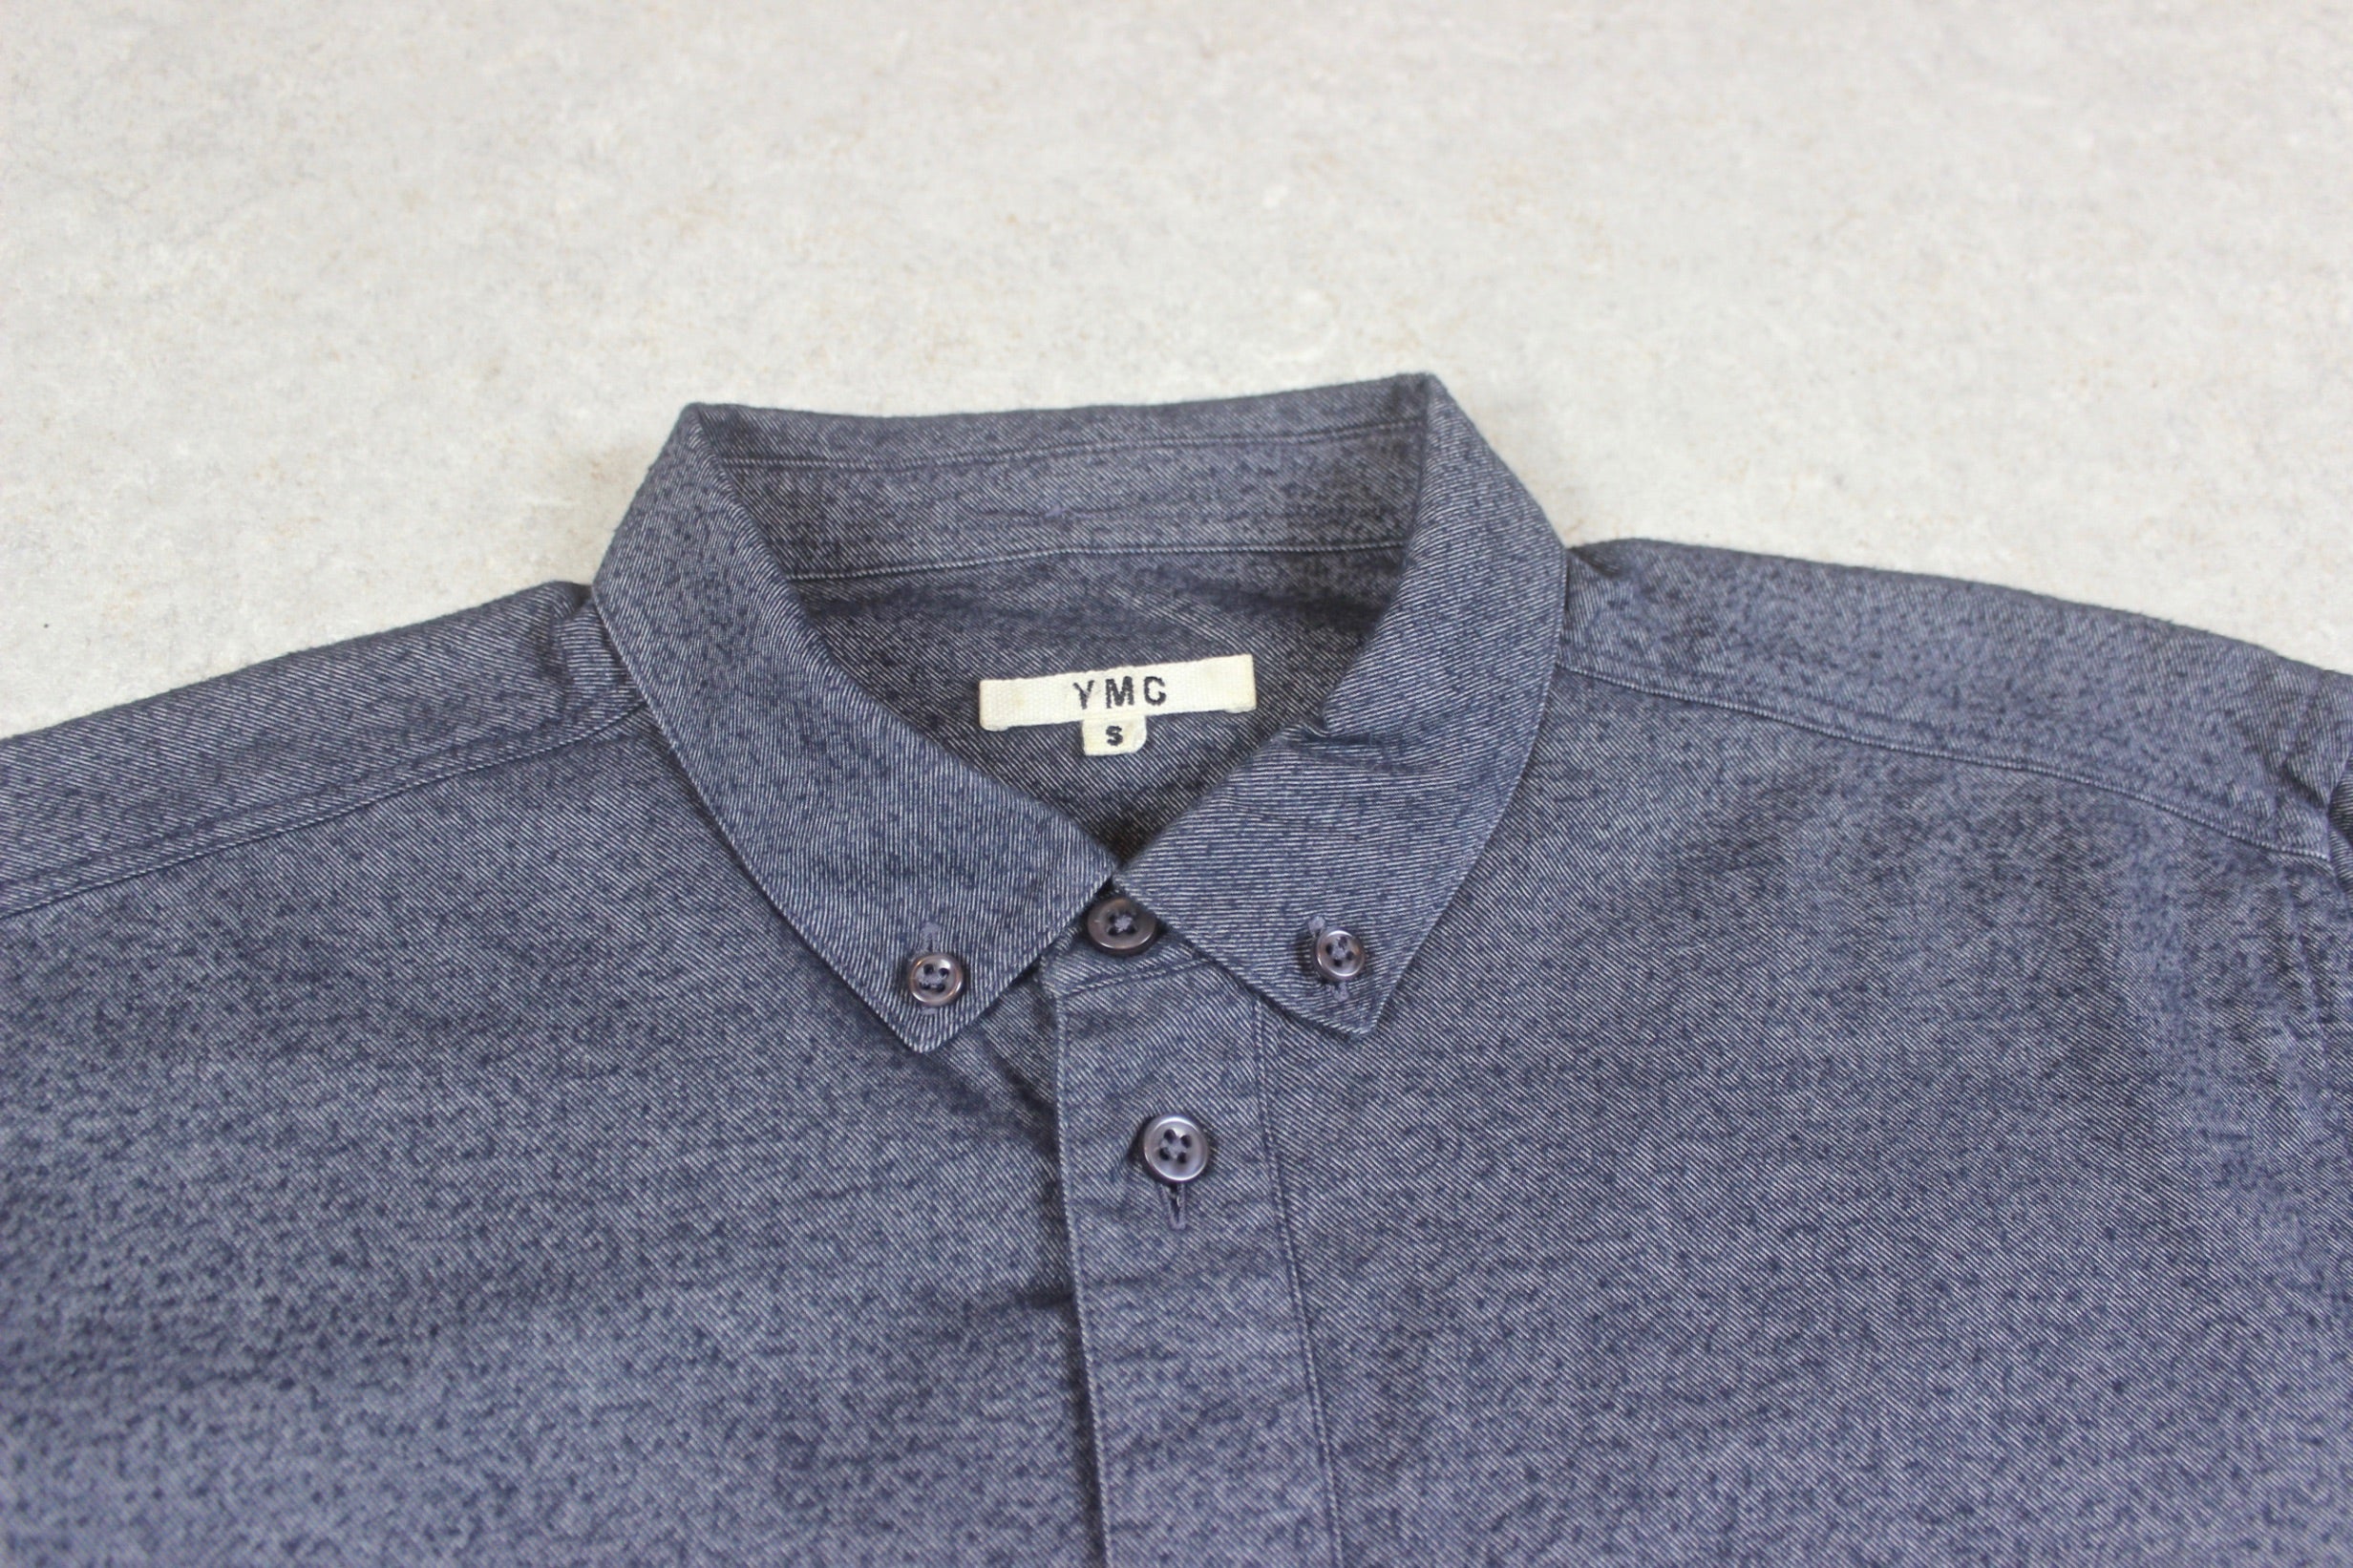 YMC - Flannel Shirt - Blue - Small